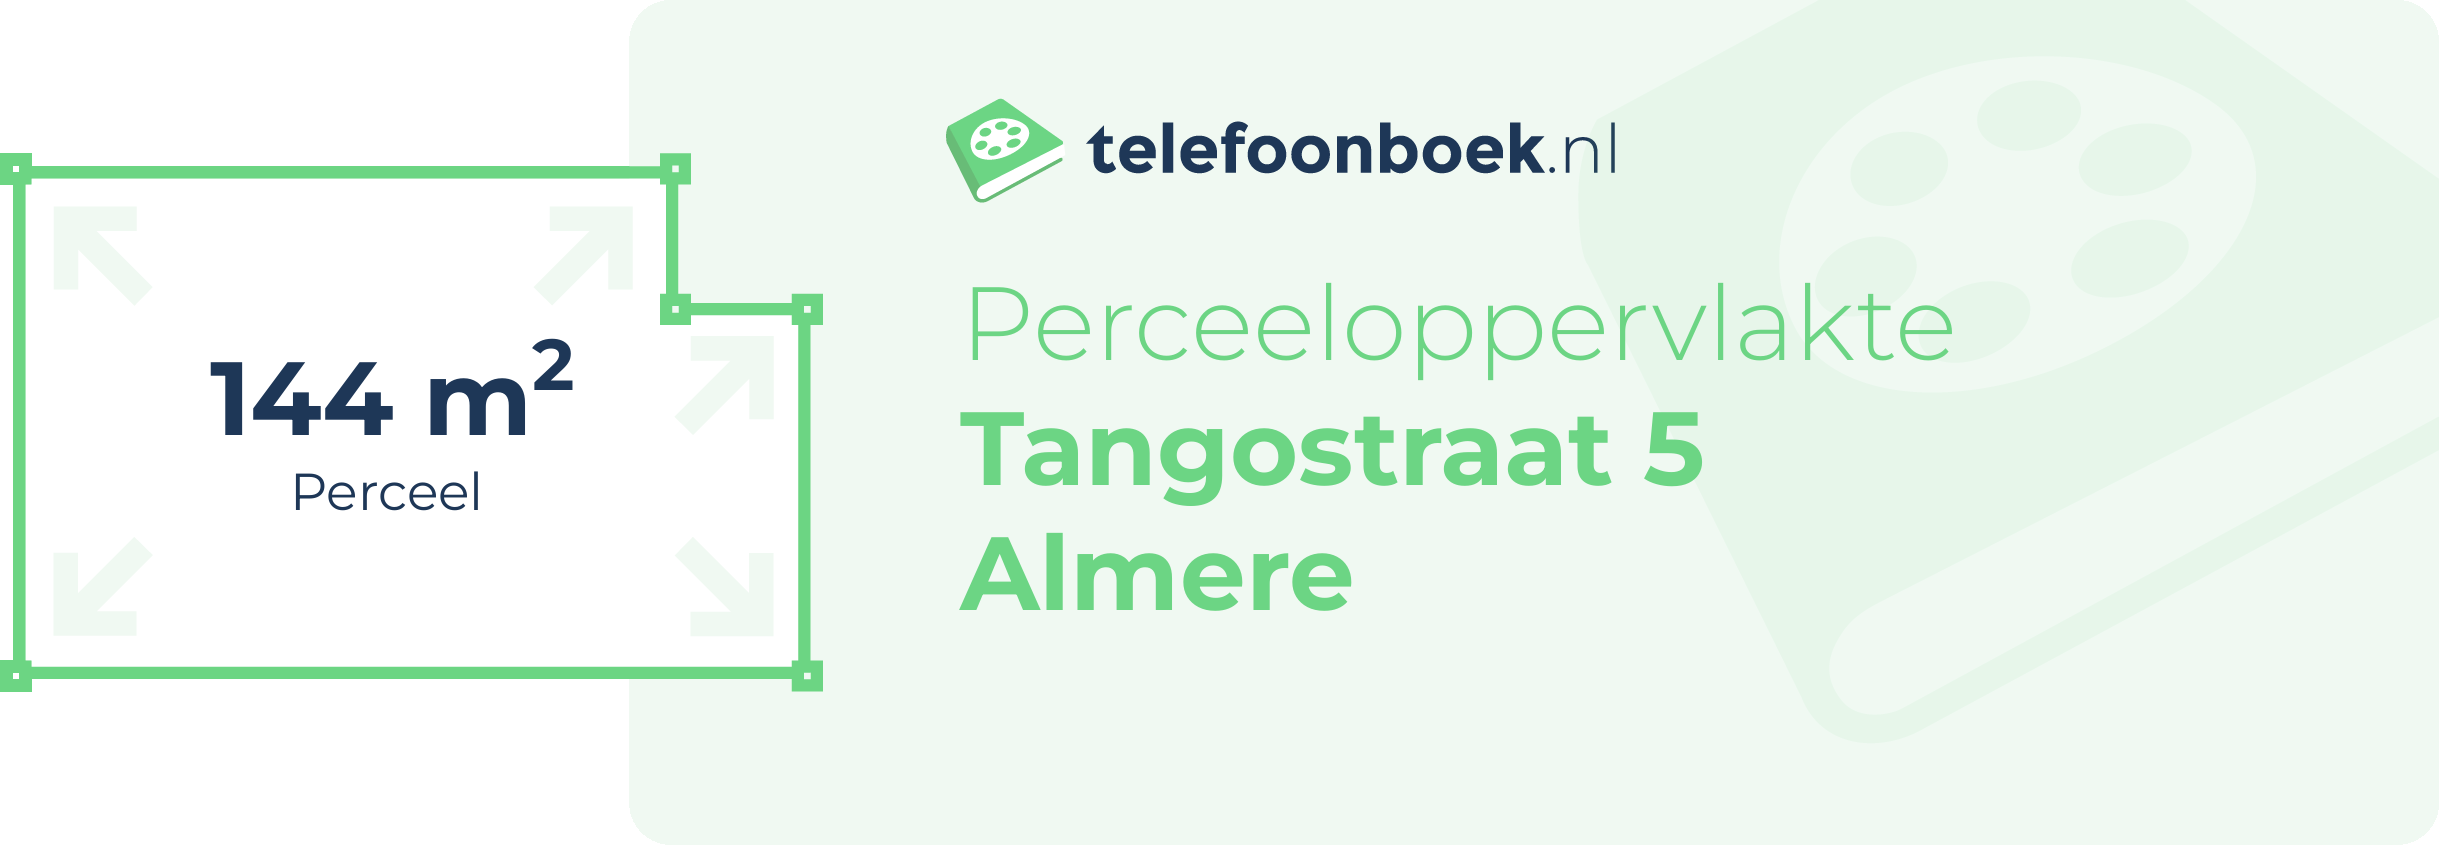 Perceeloppervlakte Tangostraat 5 Almere